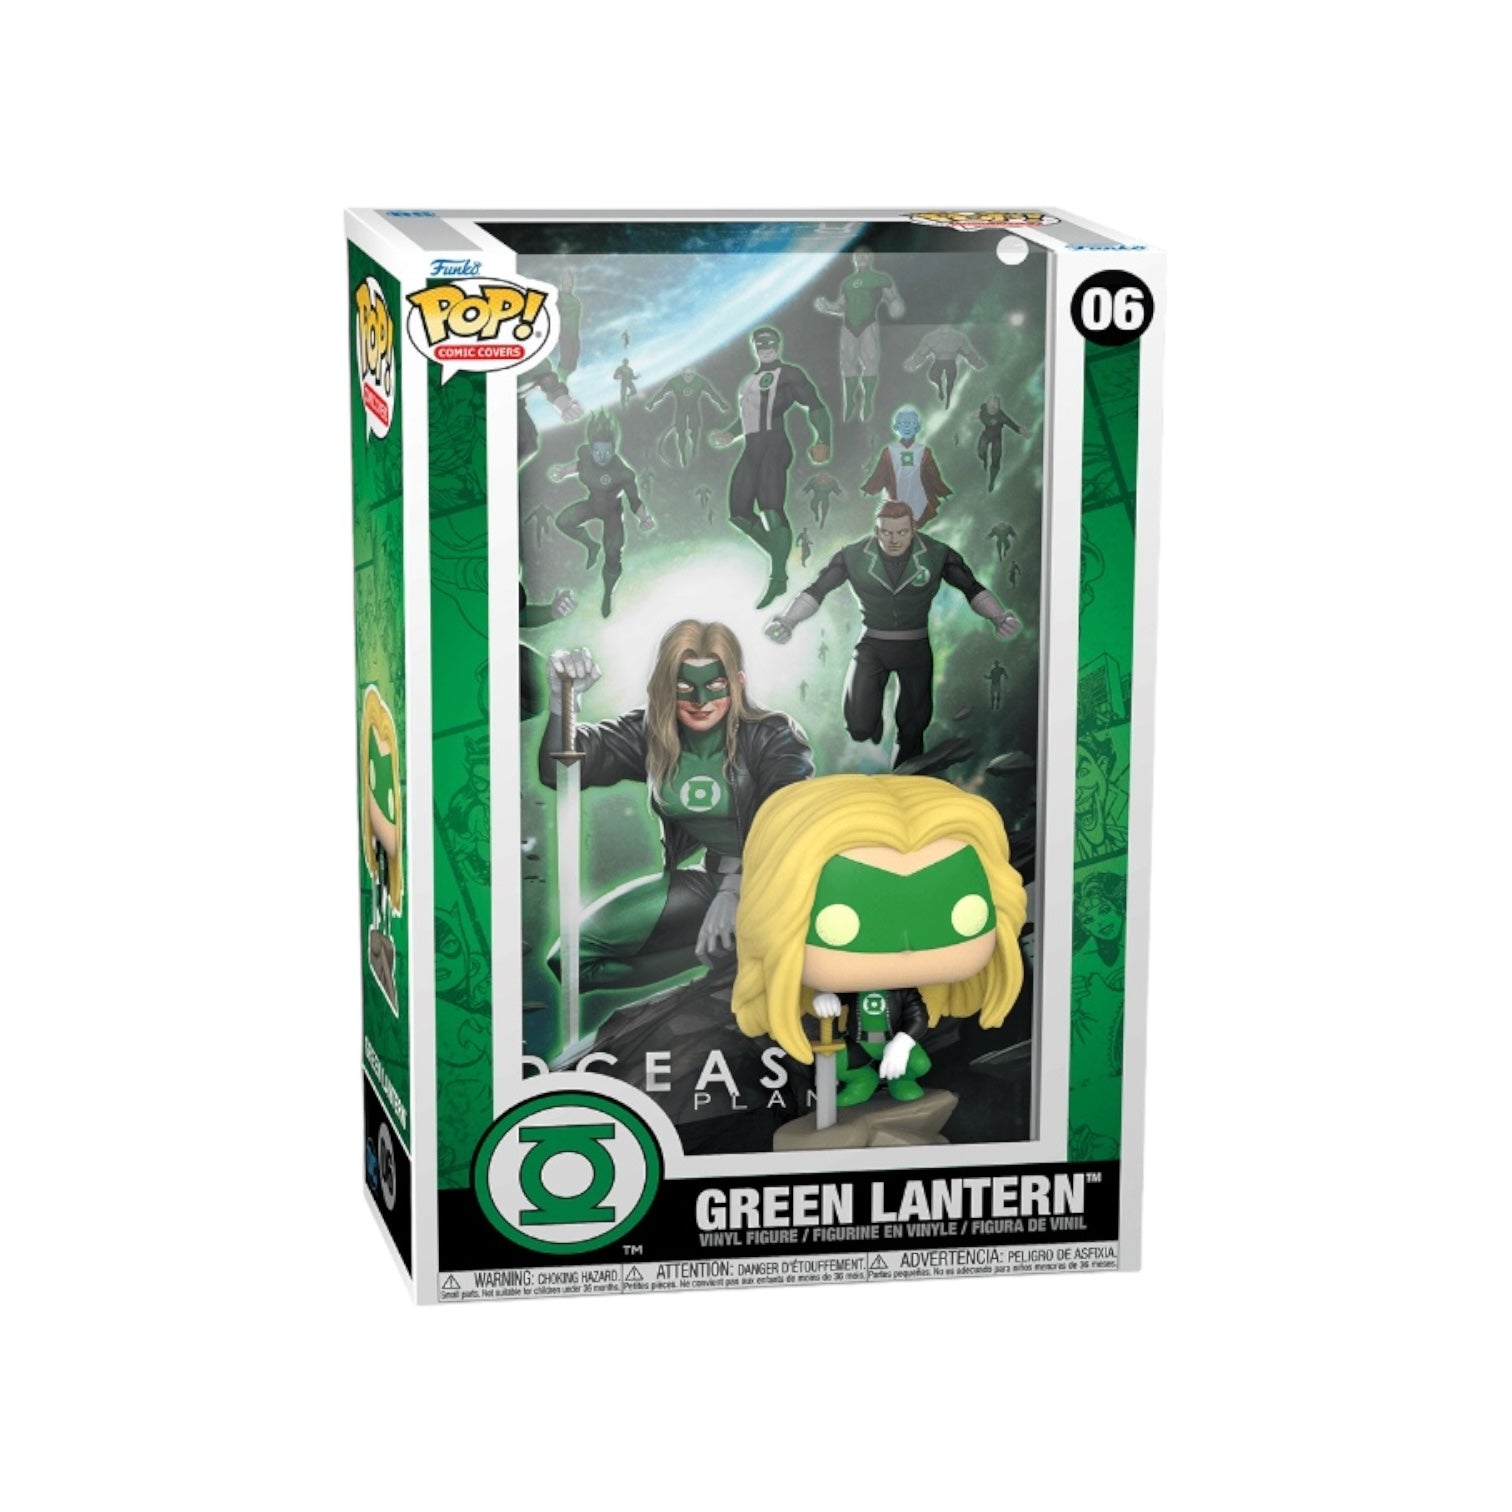 Green Lantern #06 Funko Comic Cover Pop! - Dceased Dead Planet - DC Supper Heroes